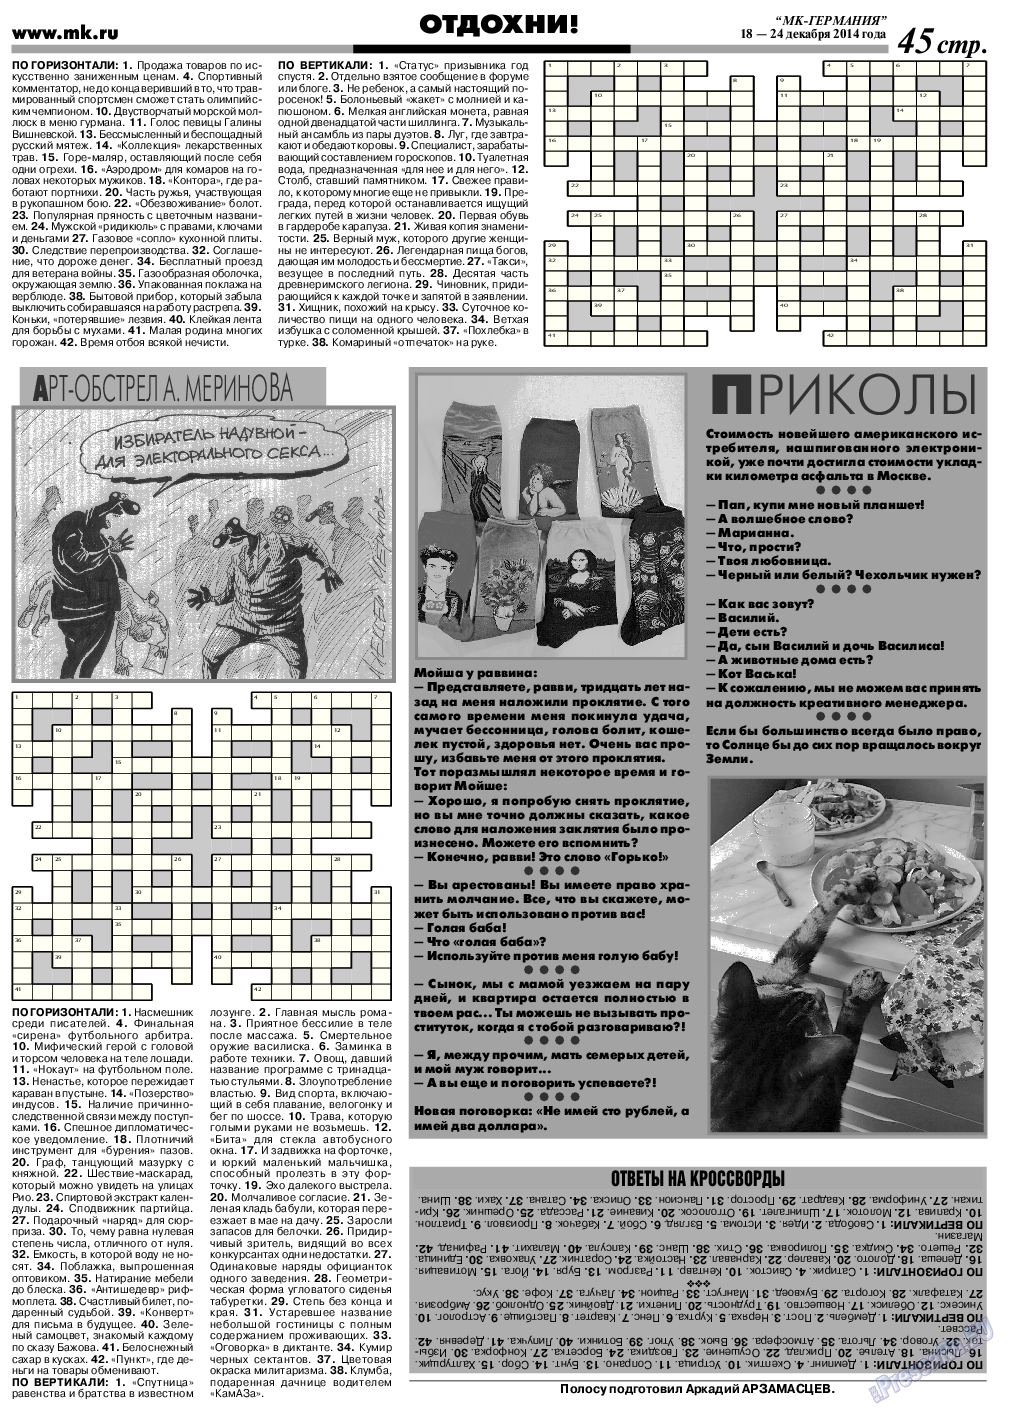 МК-Германия, газета. 2014 №51 стр.45